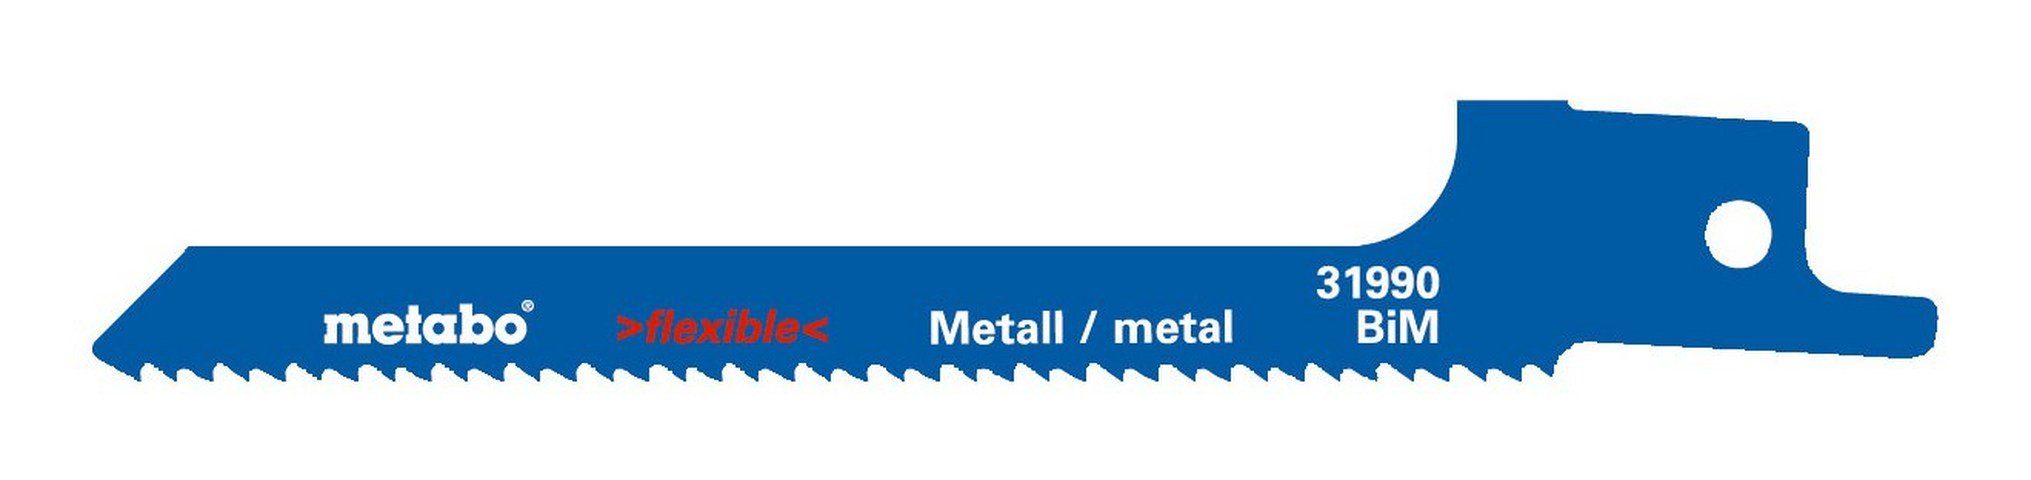 metabo Säbelsägeblatt (5 Stück), Metall x TPI 100 / Serie mm 14 BiM flexible mm 1,8 0,9